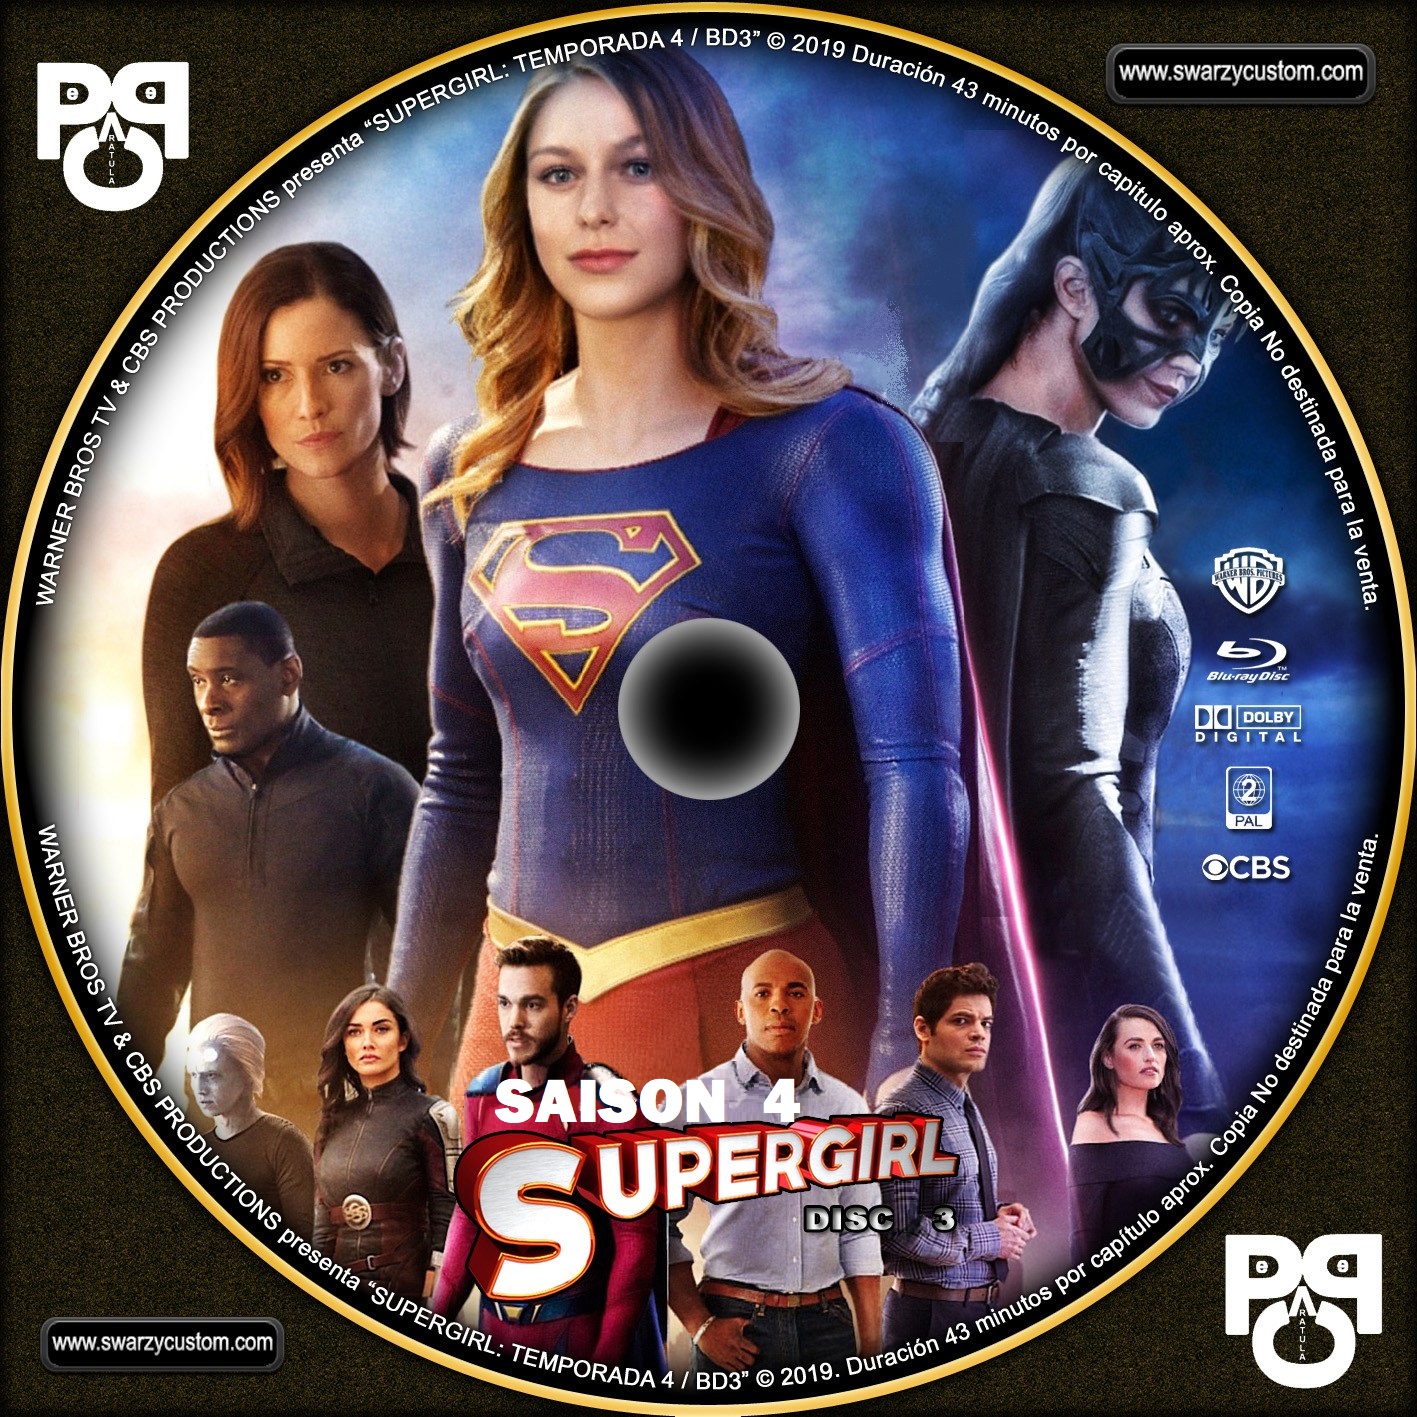 Supergirl saison 4 custom (BLU-RAY) DISC 3